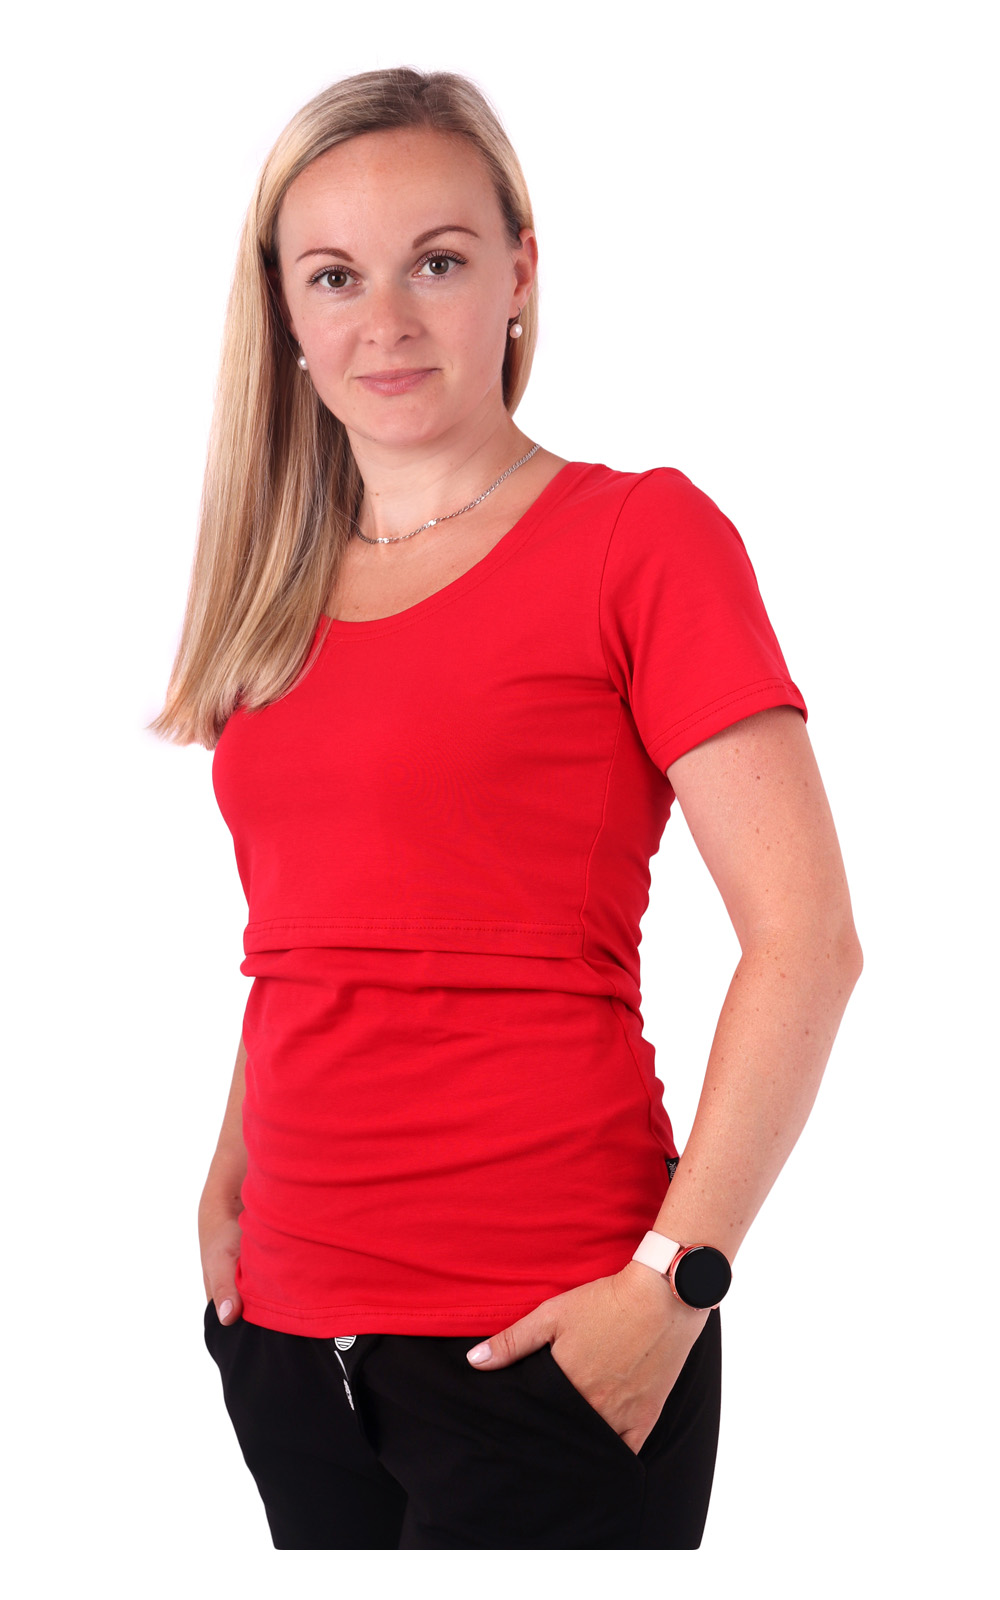 Breast-feeding T-shirt Katerina, short sleeves, RED